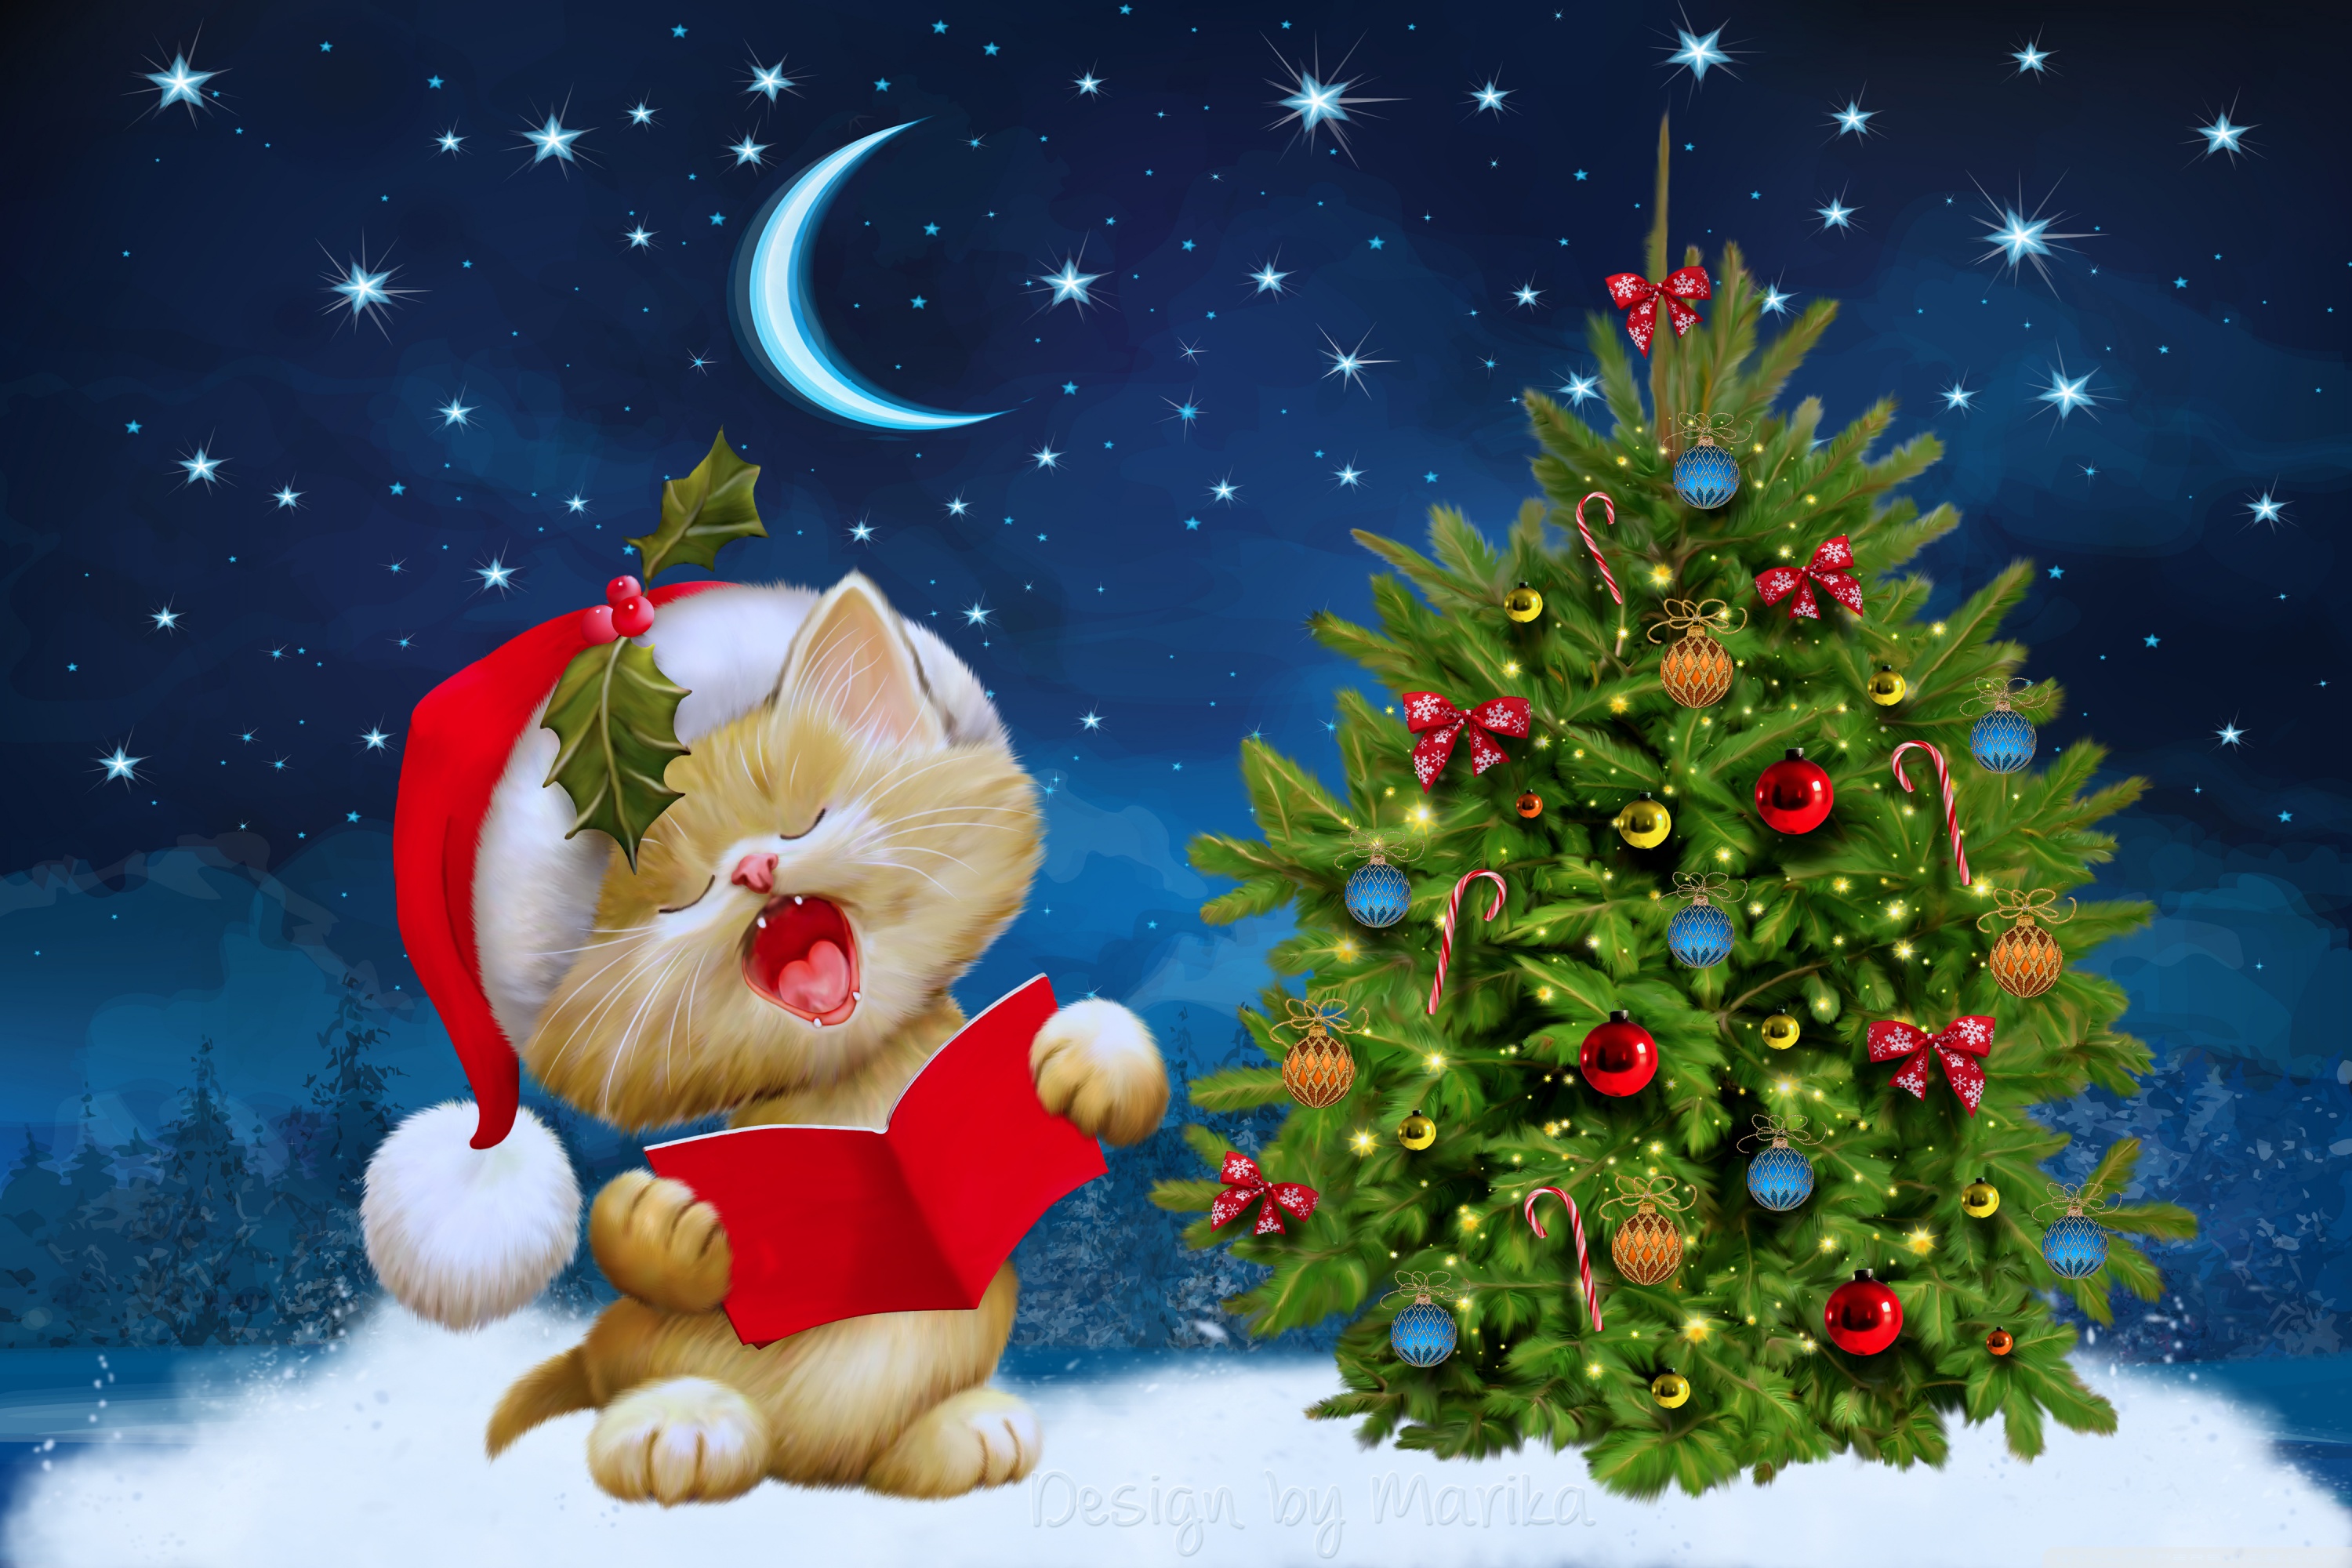 Christmas Carols Ultra HD Desktop Background Wallpaper For 4k UHD